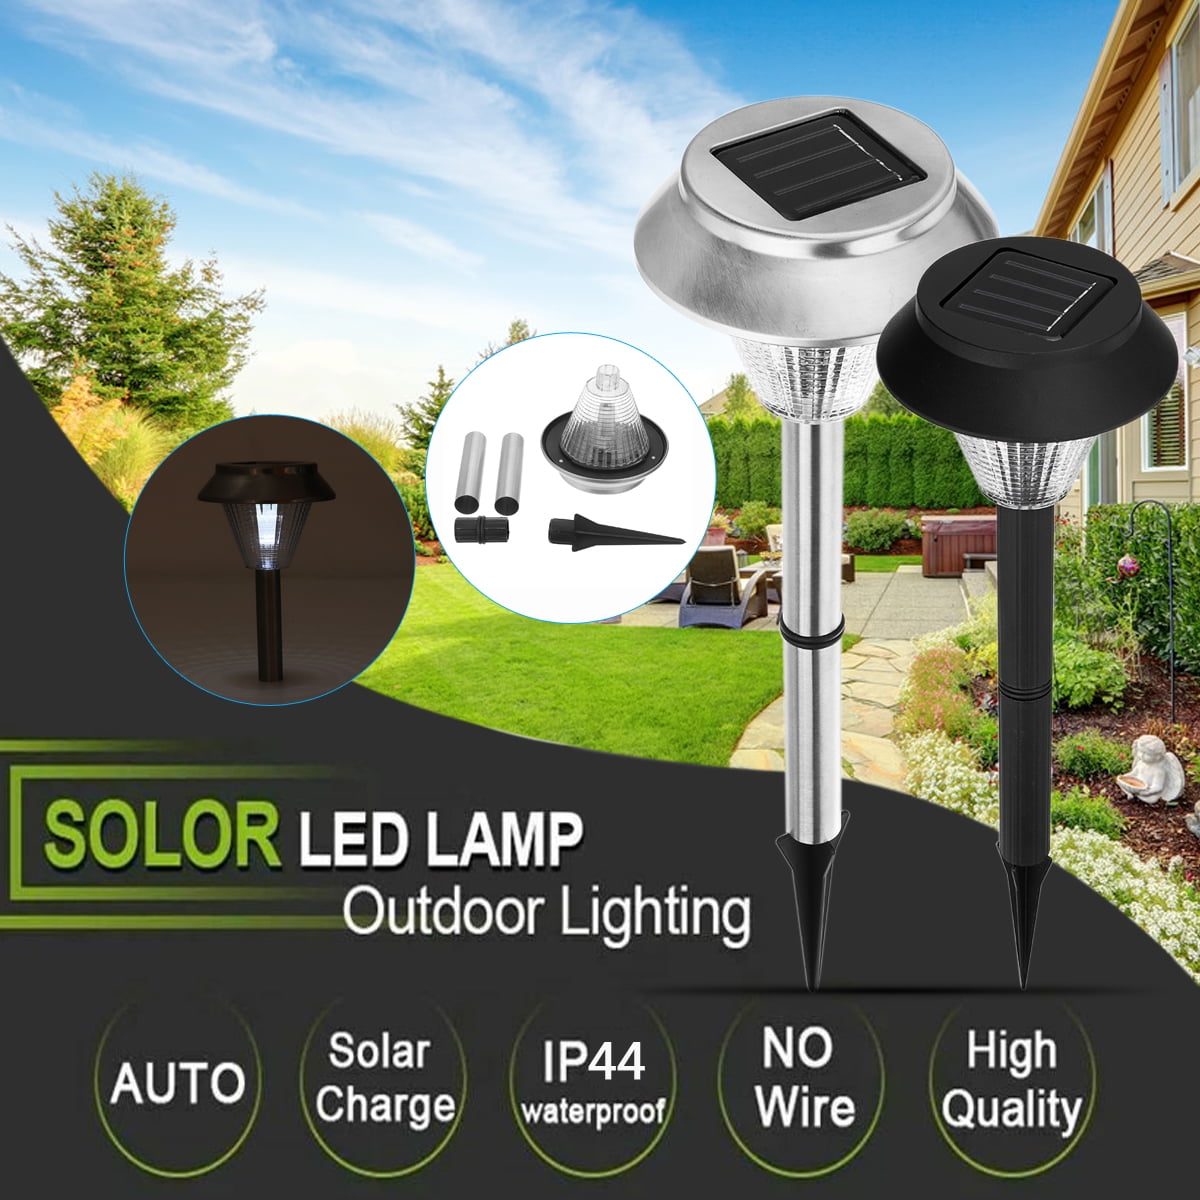 Details about   LED Light Outdoor Landscape Spotlights Lights Garden Wall Yard Path Lawn Lamp US